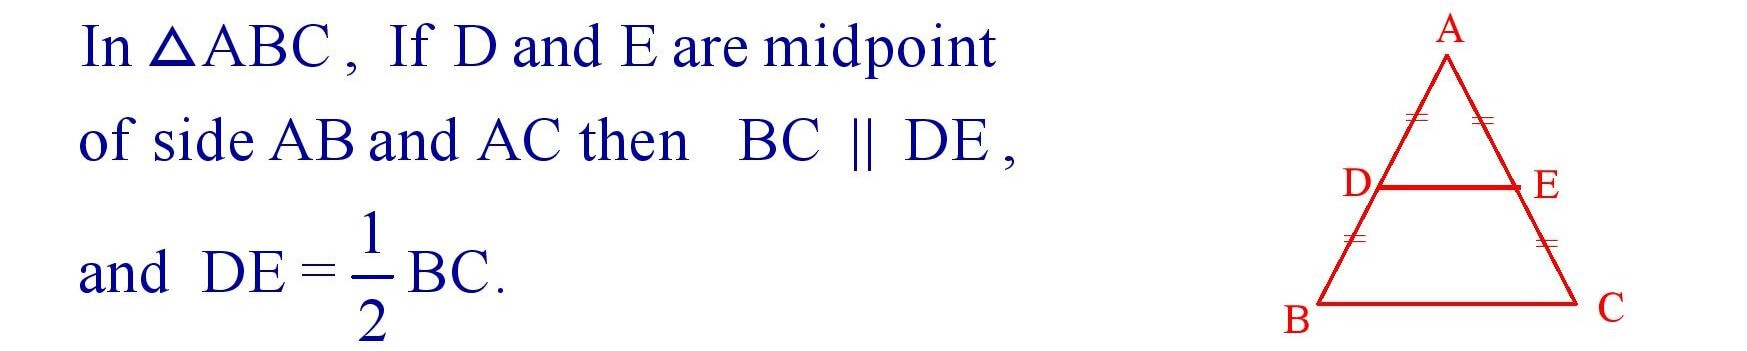 Midpoint Theorem